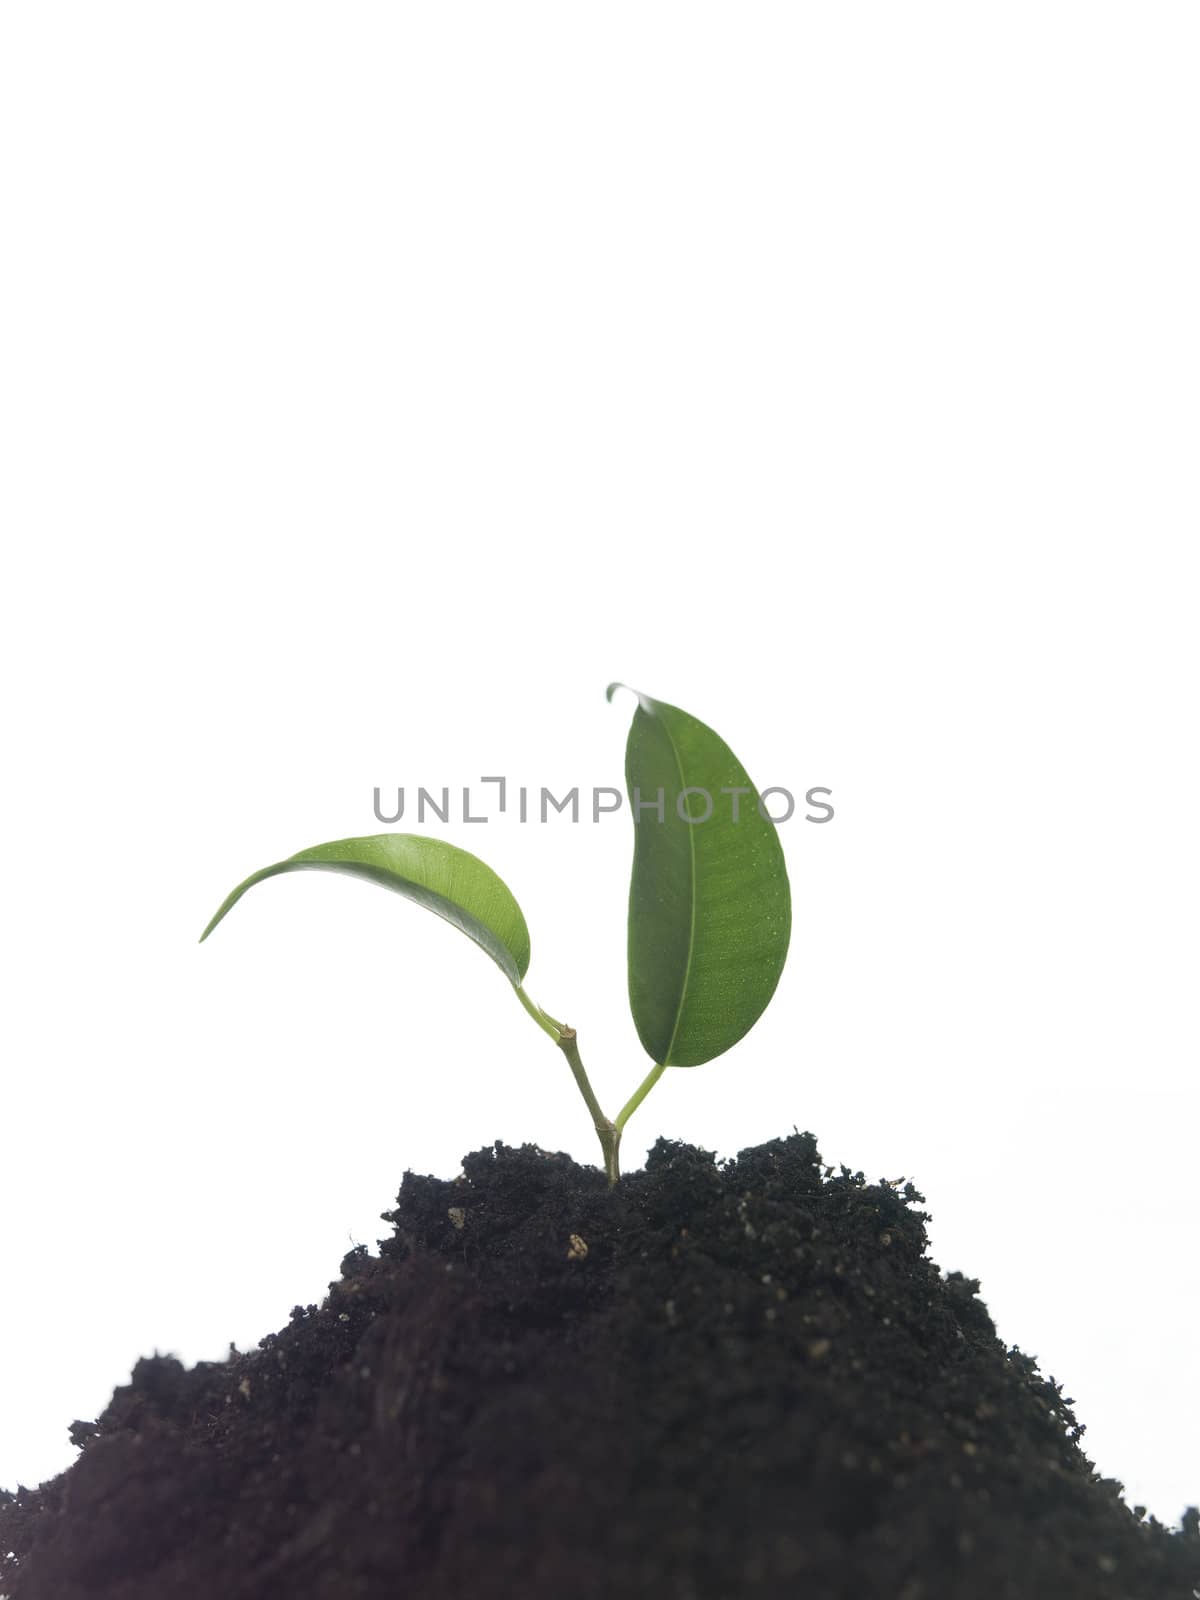 Growing plant by gemenacom